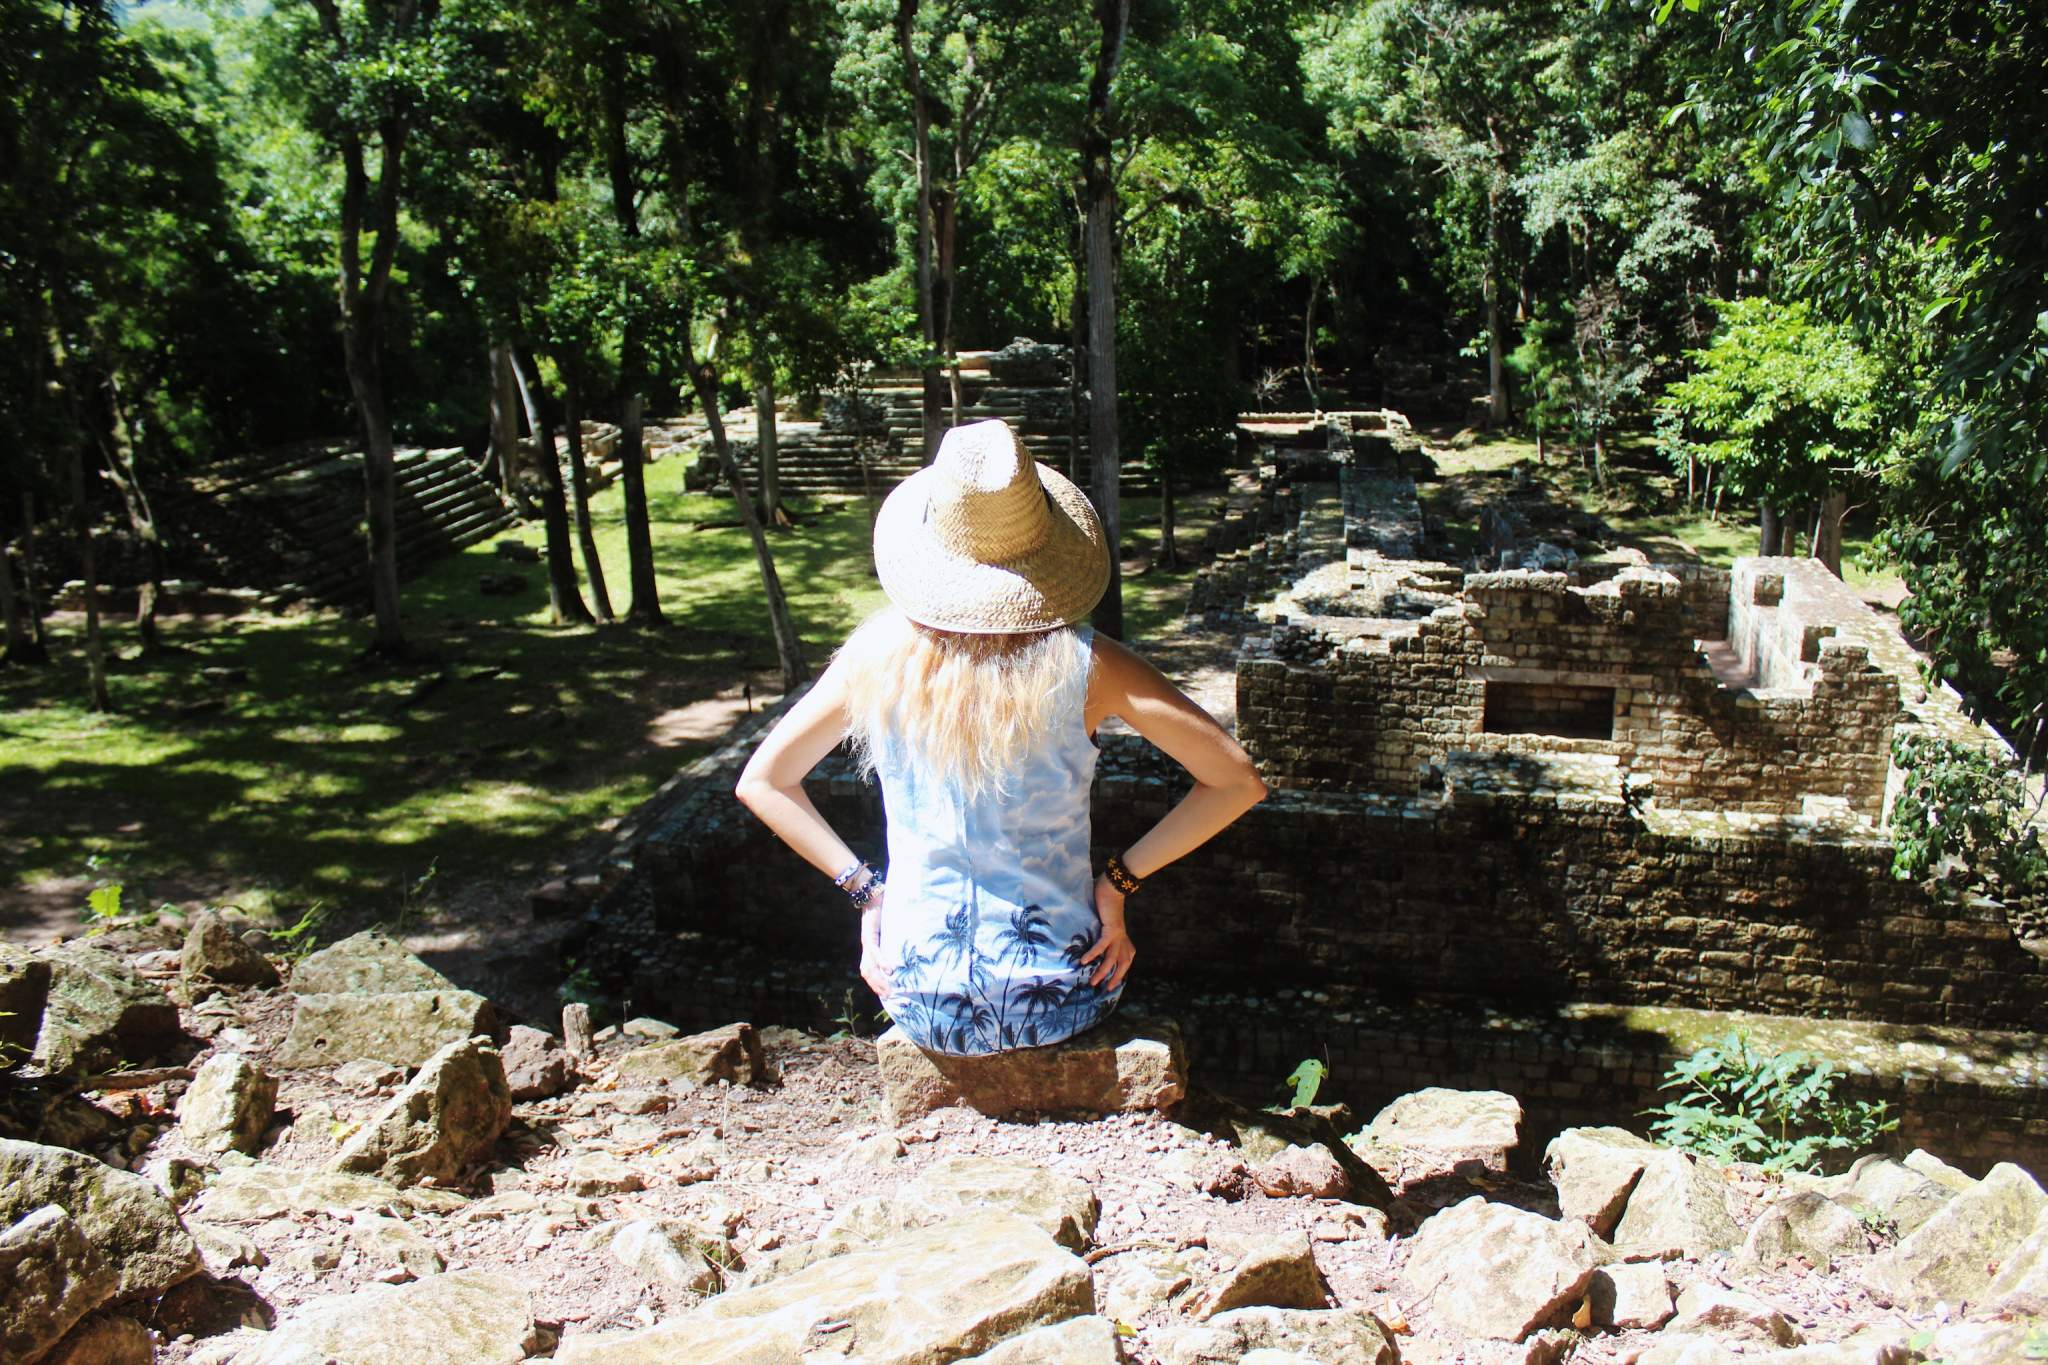 Copan Ruinas travel blog